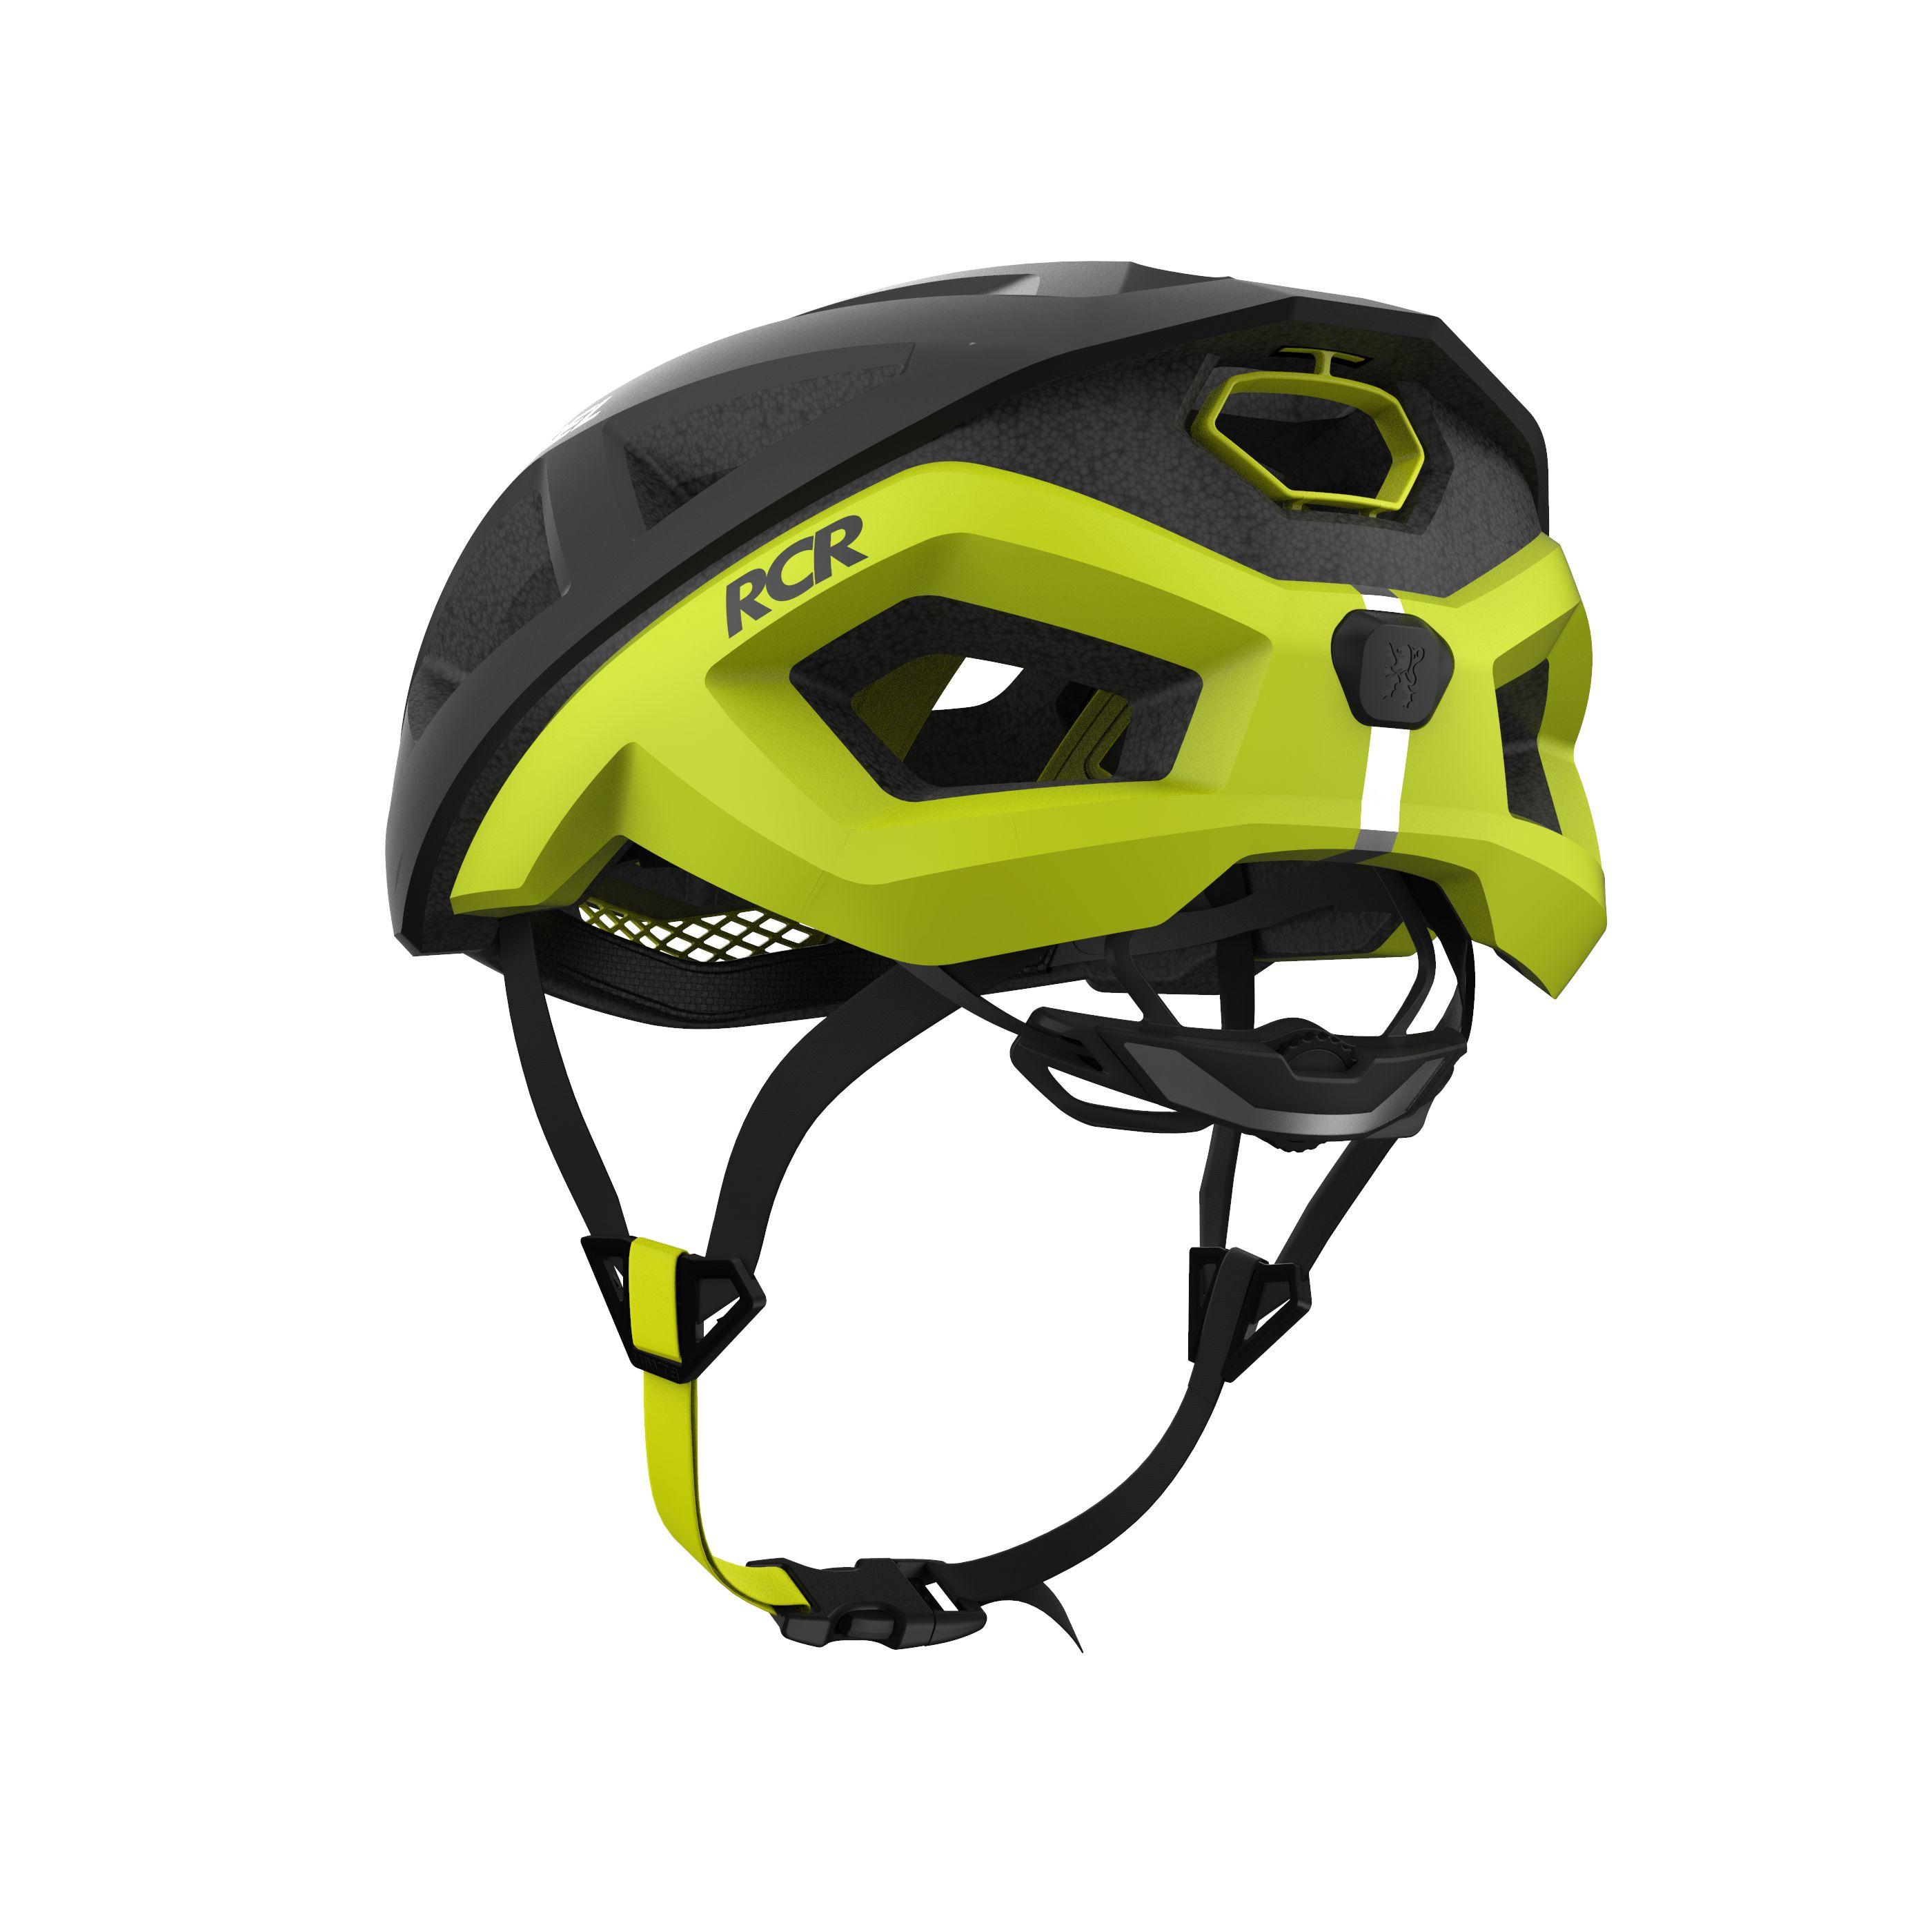 Road Cycling Helmet Aerofit 900 - Black/Yellow 9/12